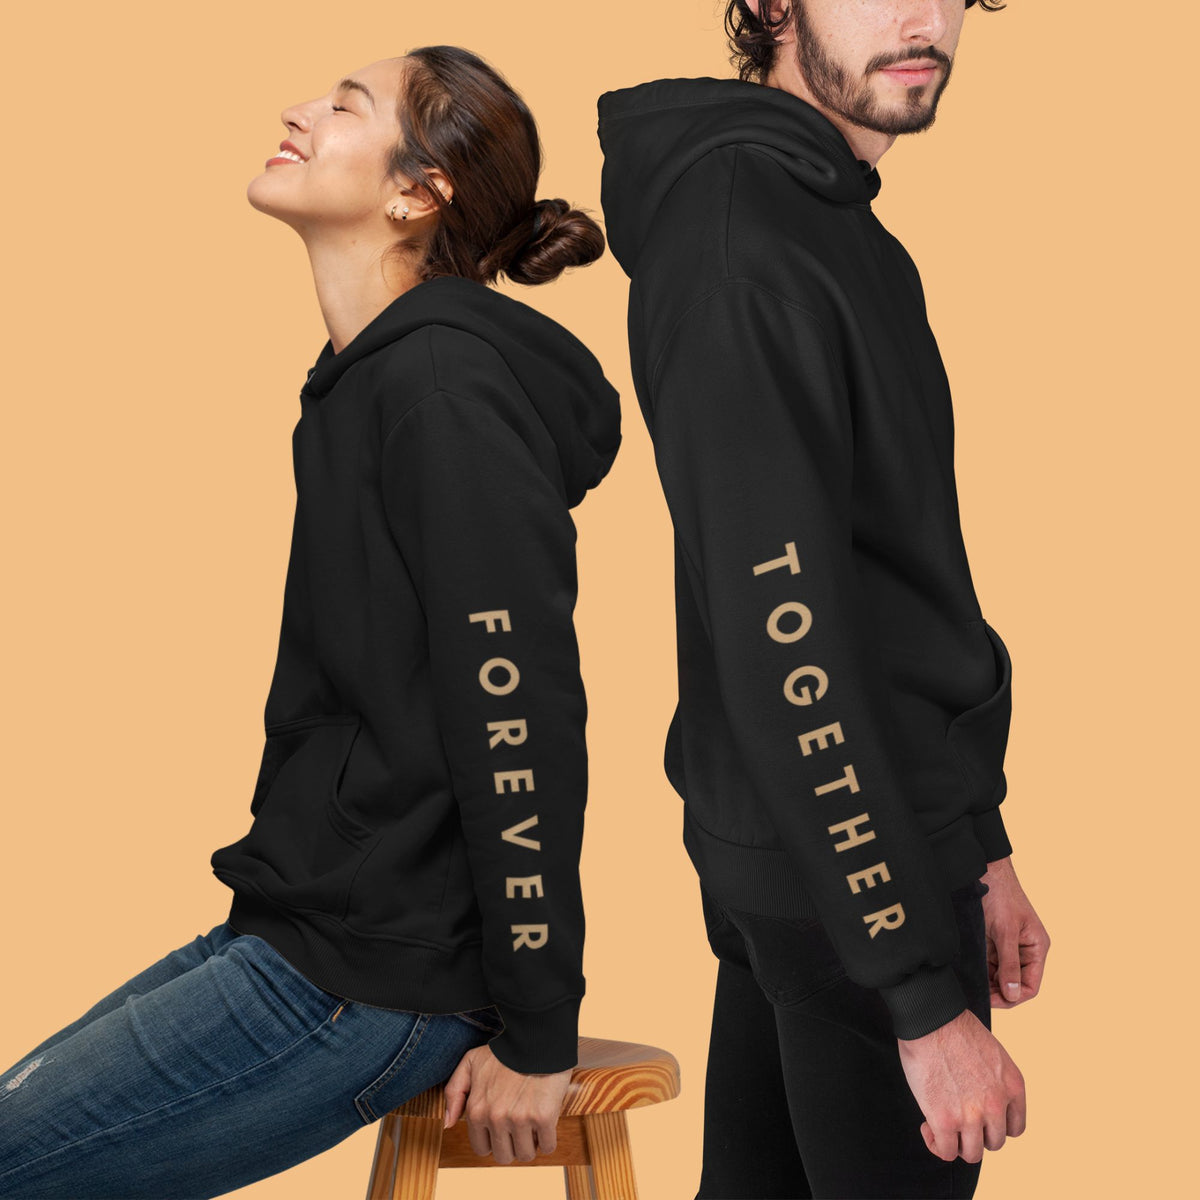 Personalized-couple-hoodies-black-sleeve-printed-addon-gogirgit